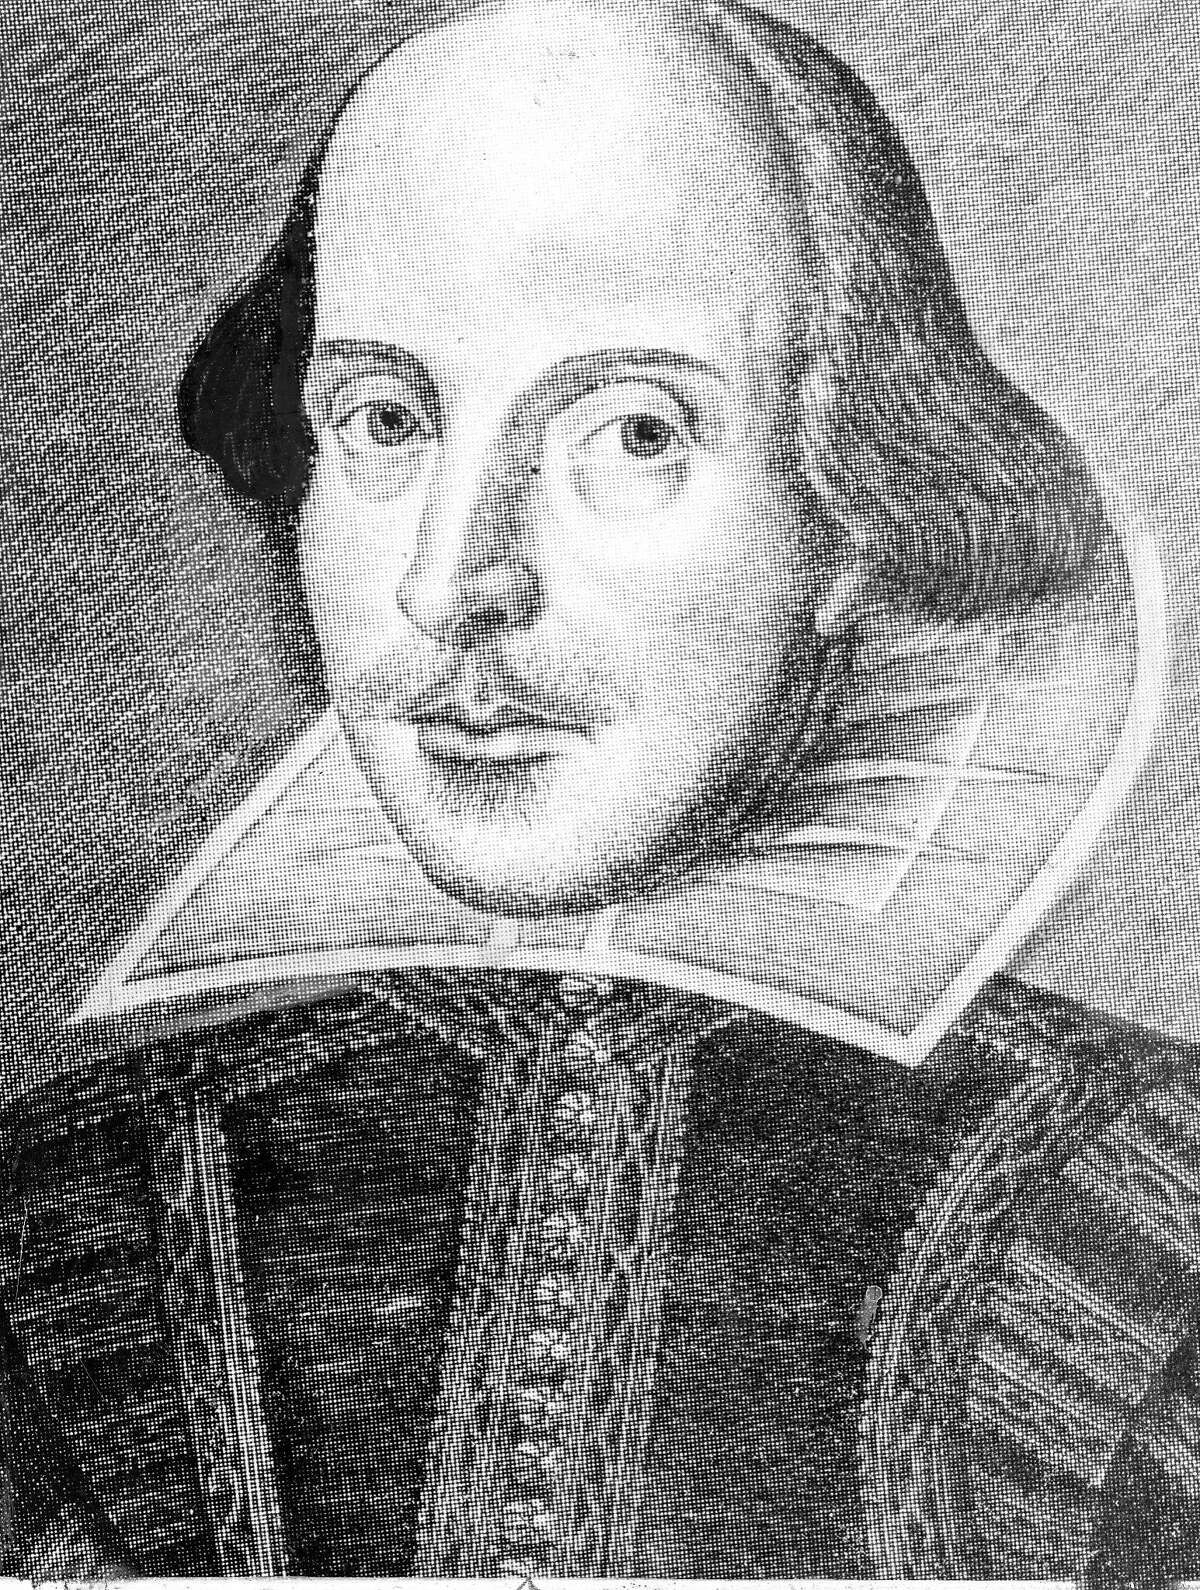 William Shakespeare Handout